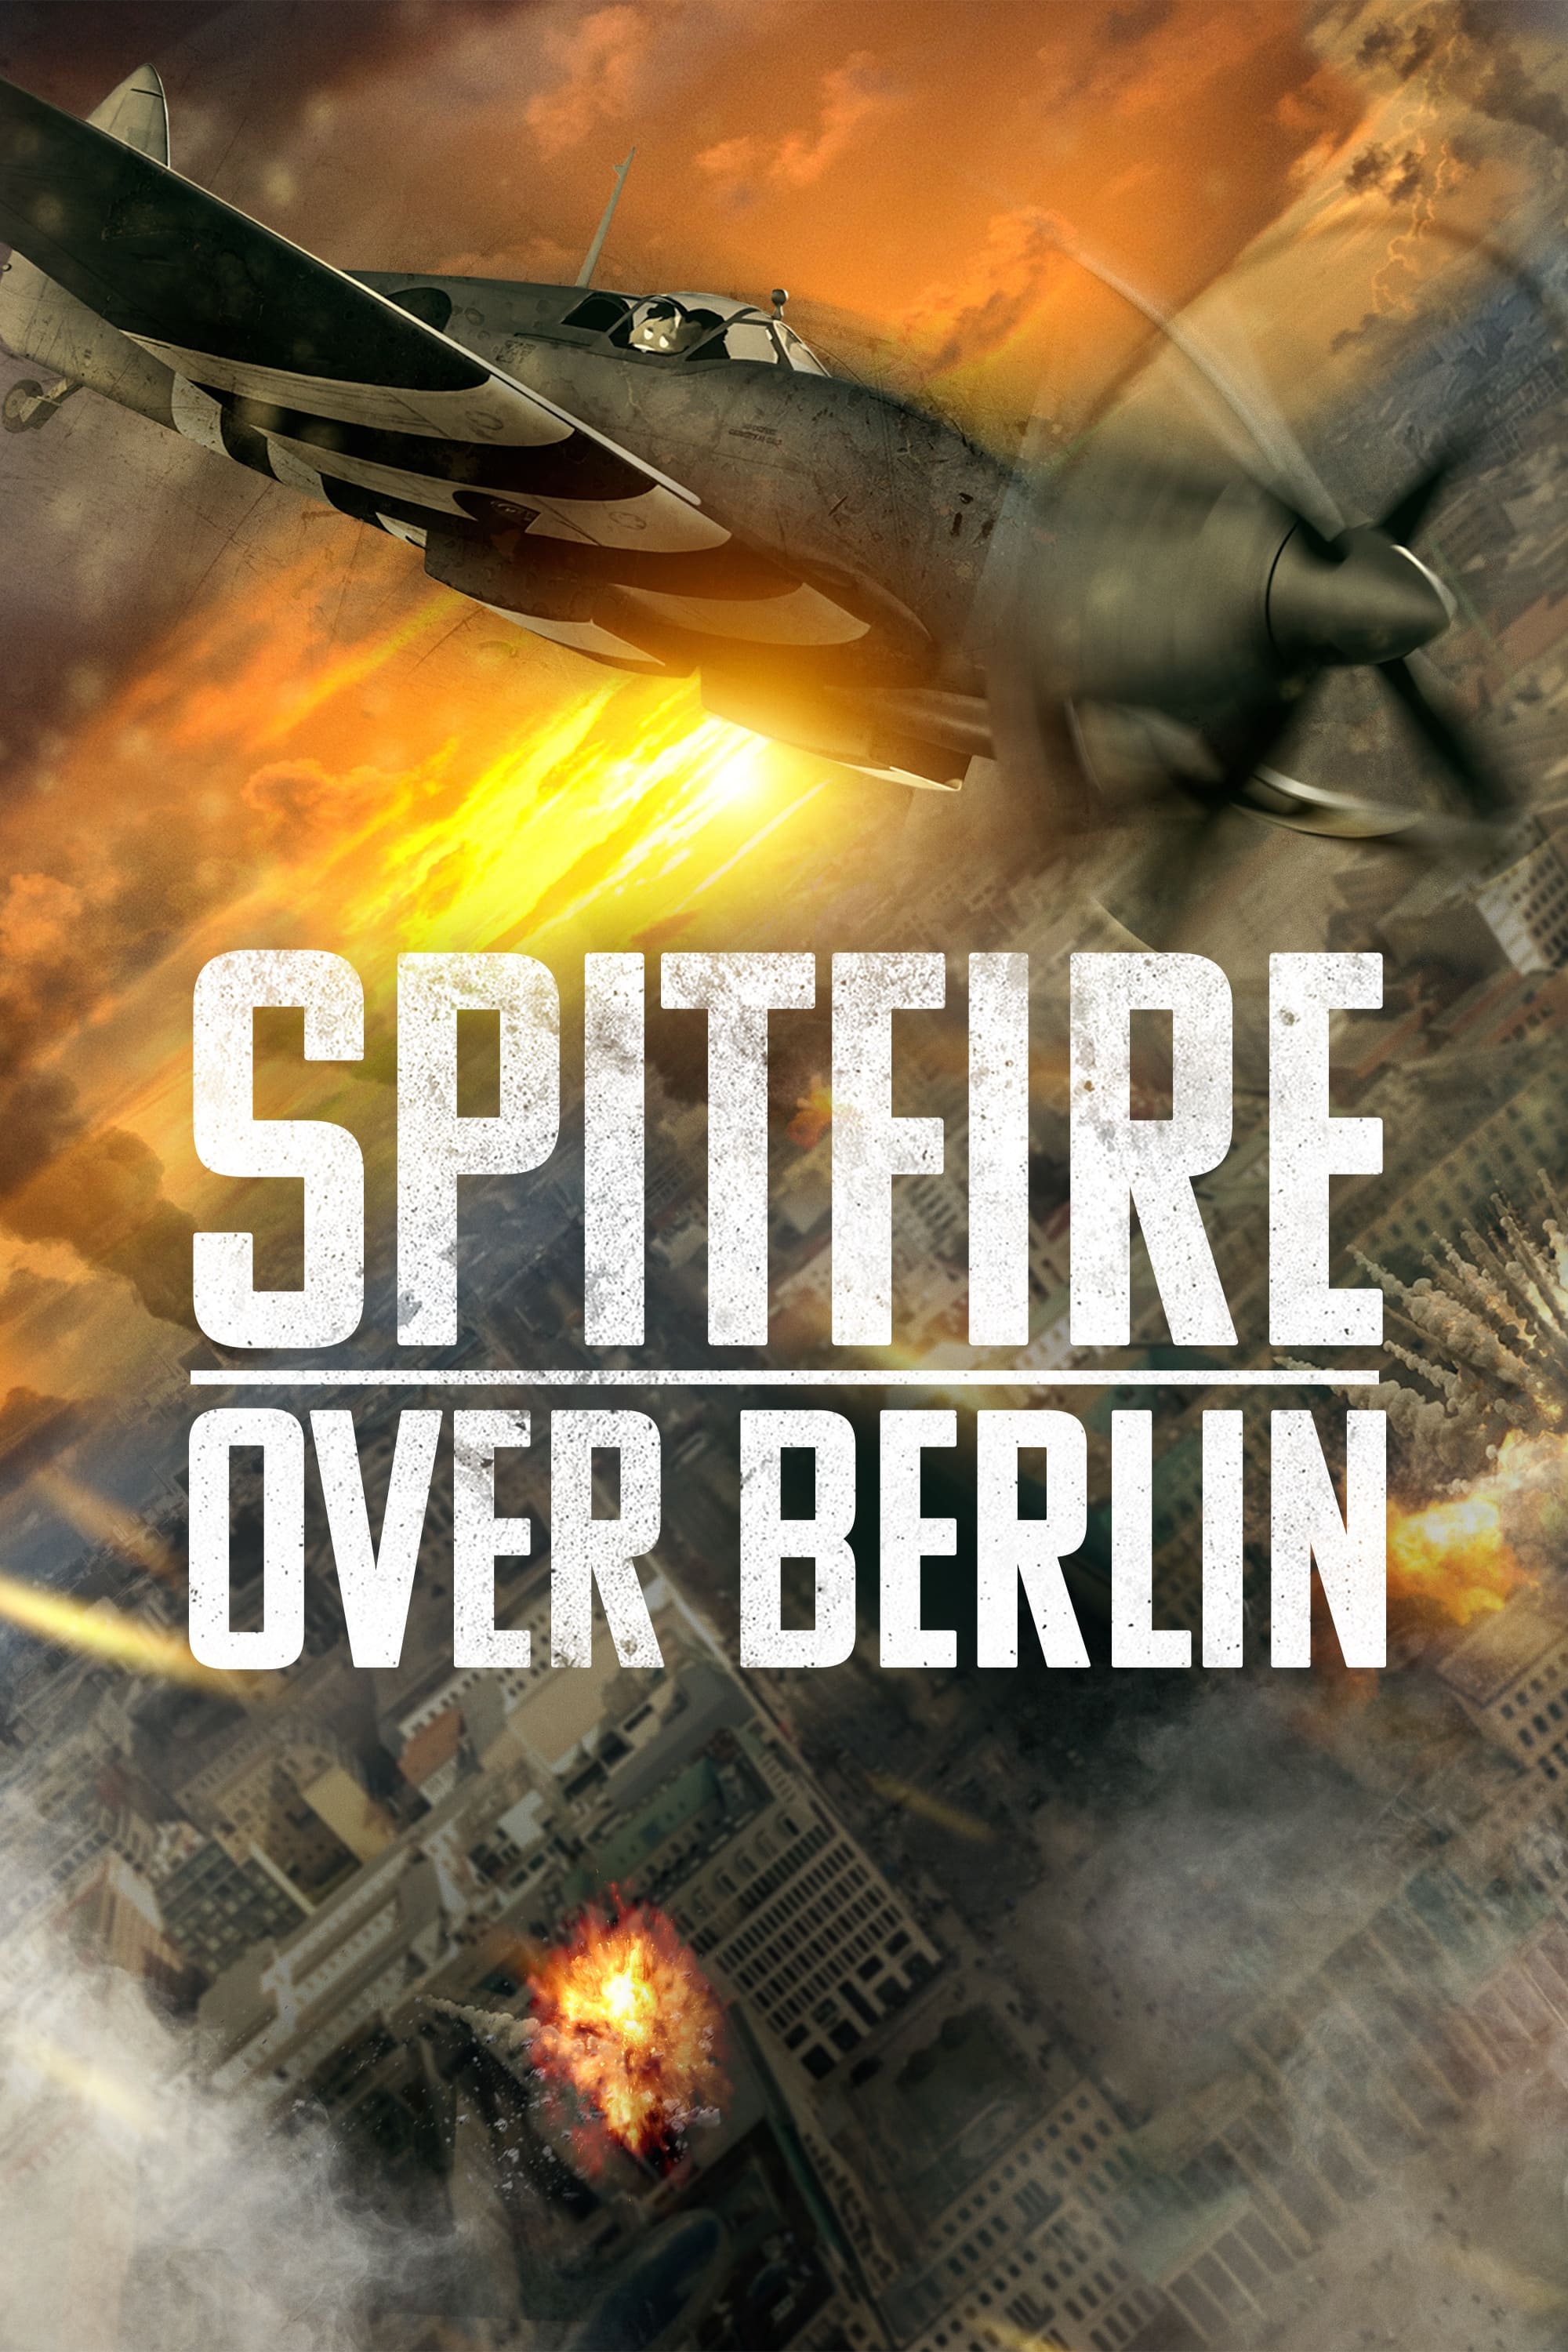 Spitfire Over Berlin film